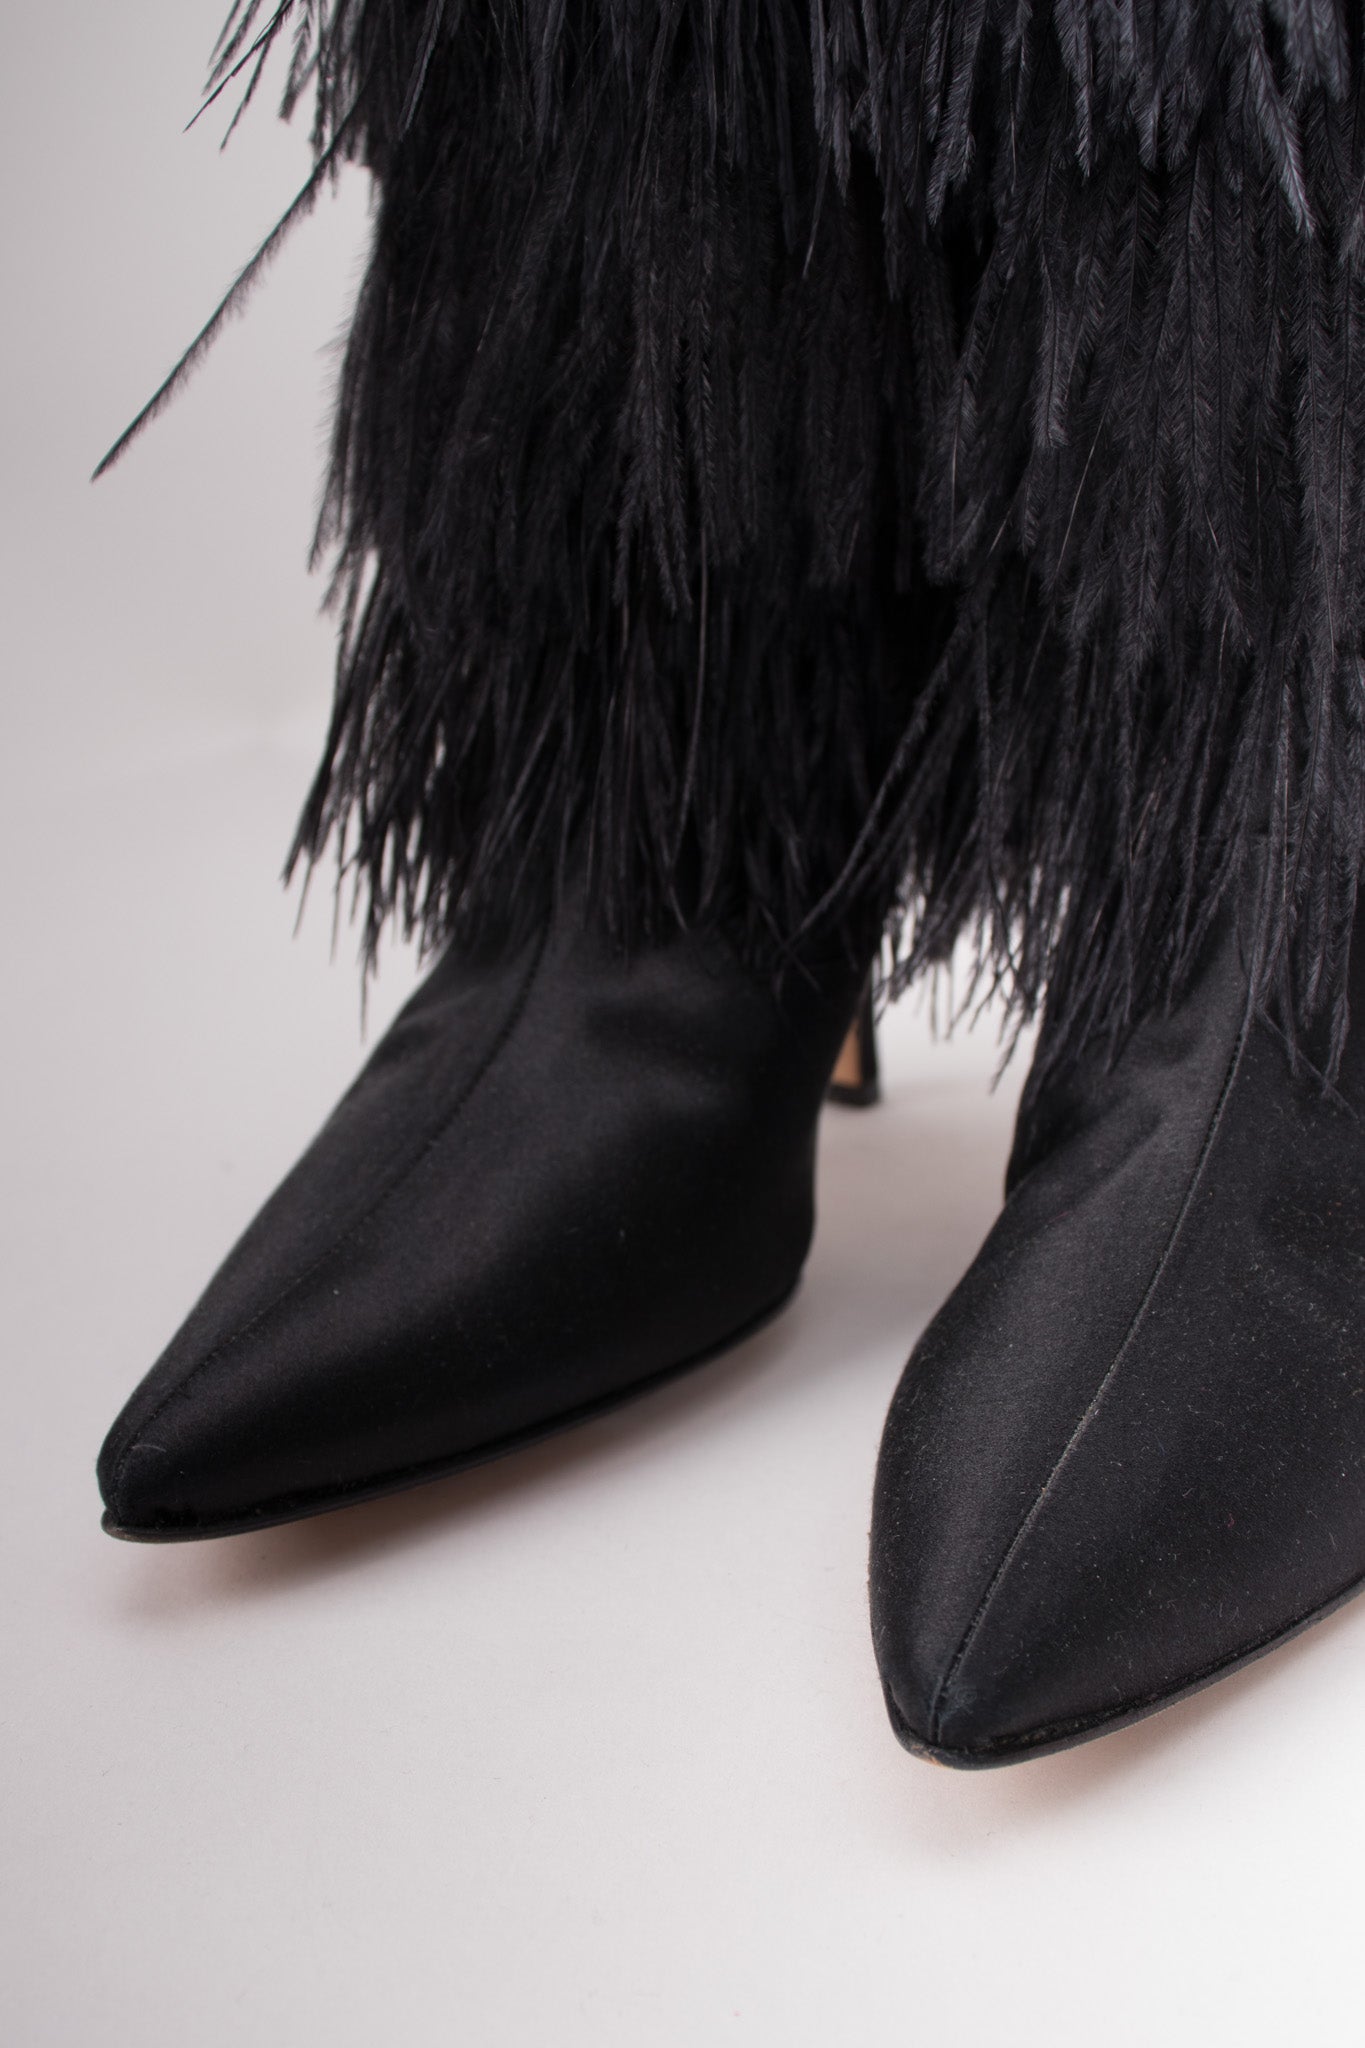 Manolo Blahnik Rockerstar Ostrich Feather Boots